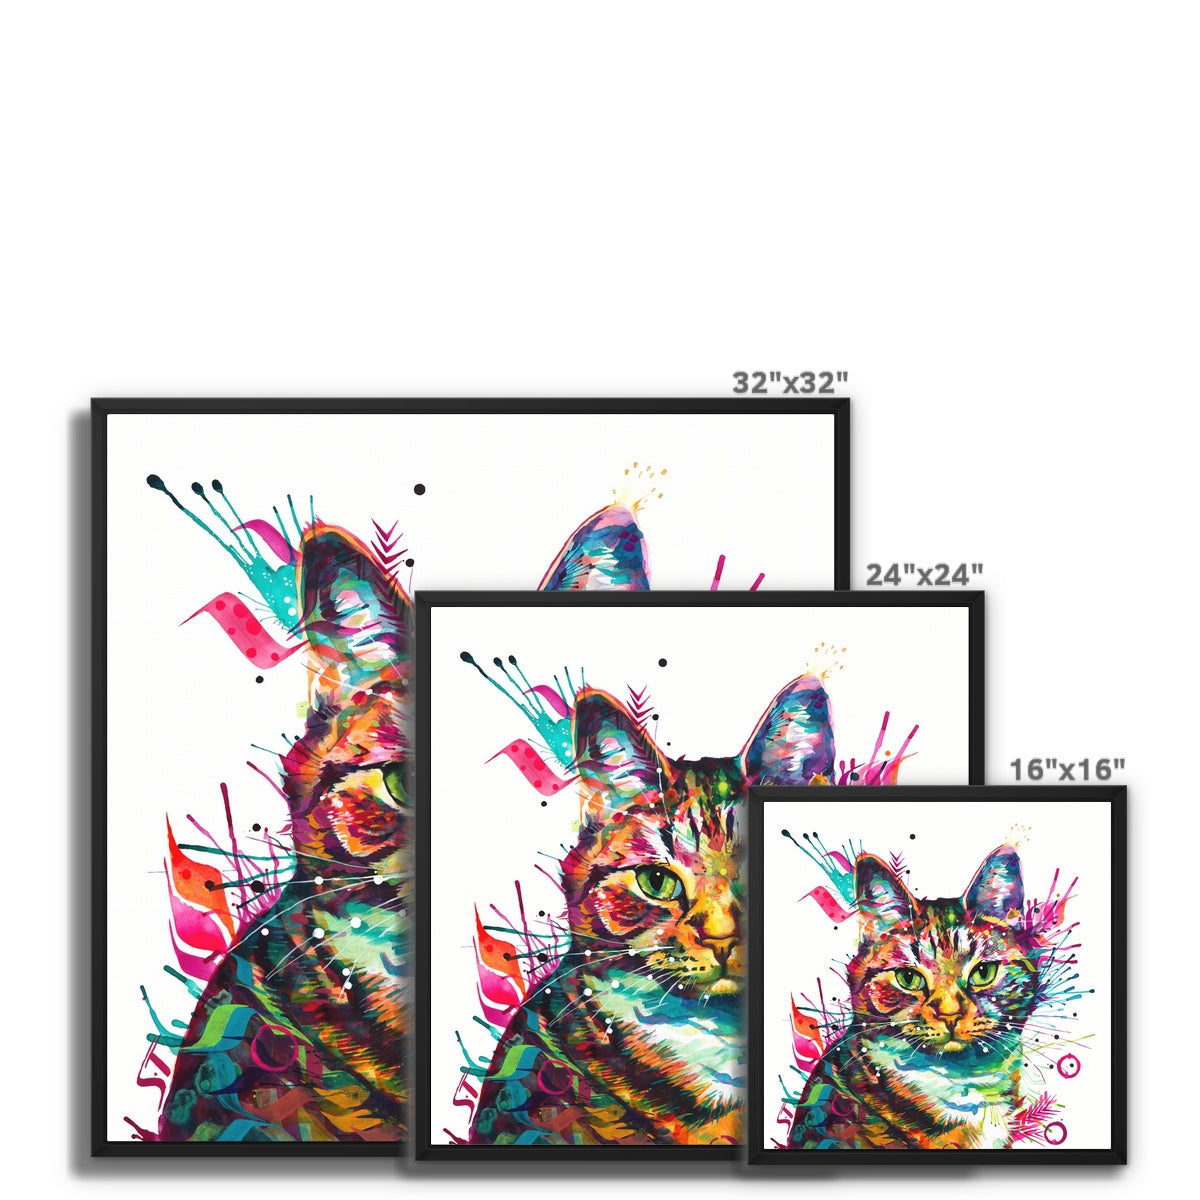 Wallart | Cat Painting | Cat Portrait | Wall Art Quirky | Animal Wall Art | Cat Artwork